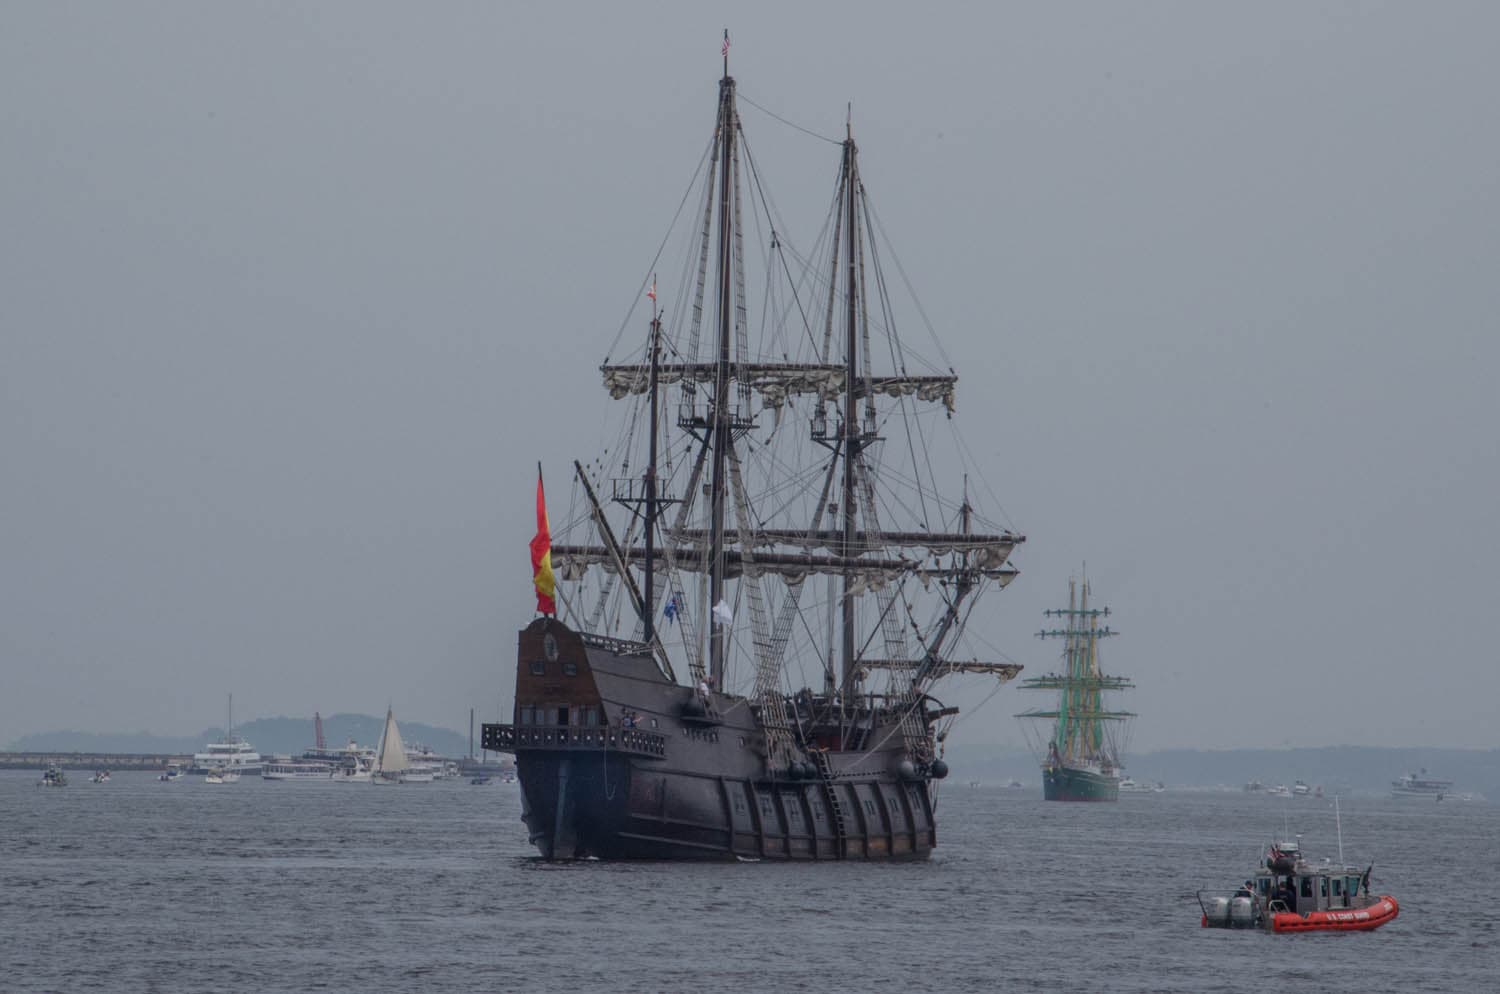 The Spanish tall ship El Galeon in Boston Harbor Saturday. The ship is a replica of a 17th century Spanish Galleon. (Sharon Brody/WBUR)